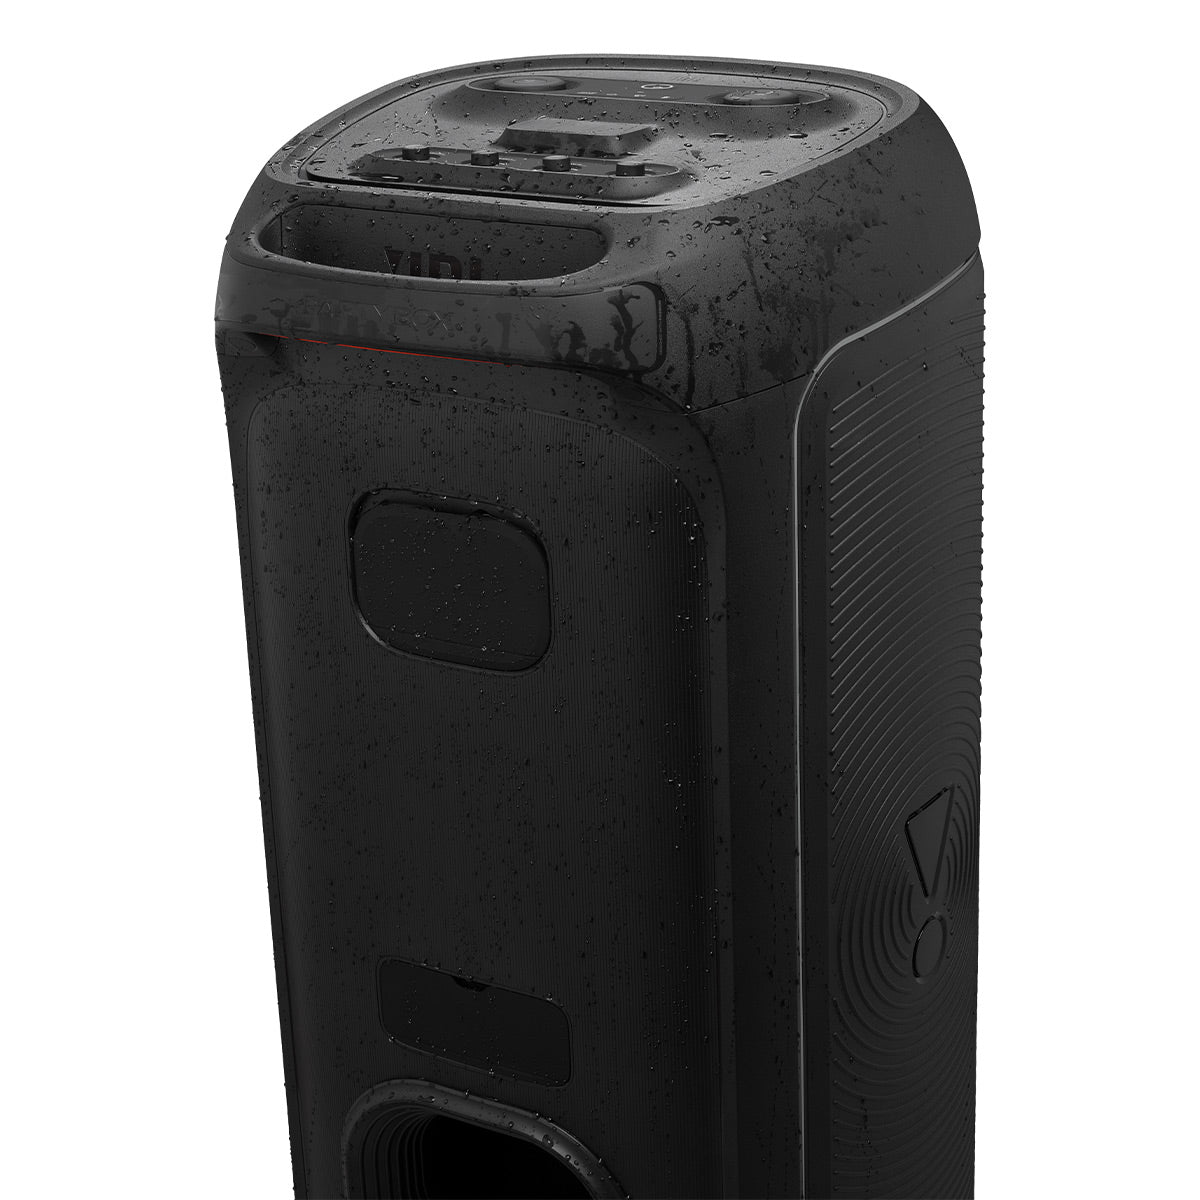 JBL PartyBox 1000 Portable Bluetooth Speaker - Black at best price